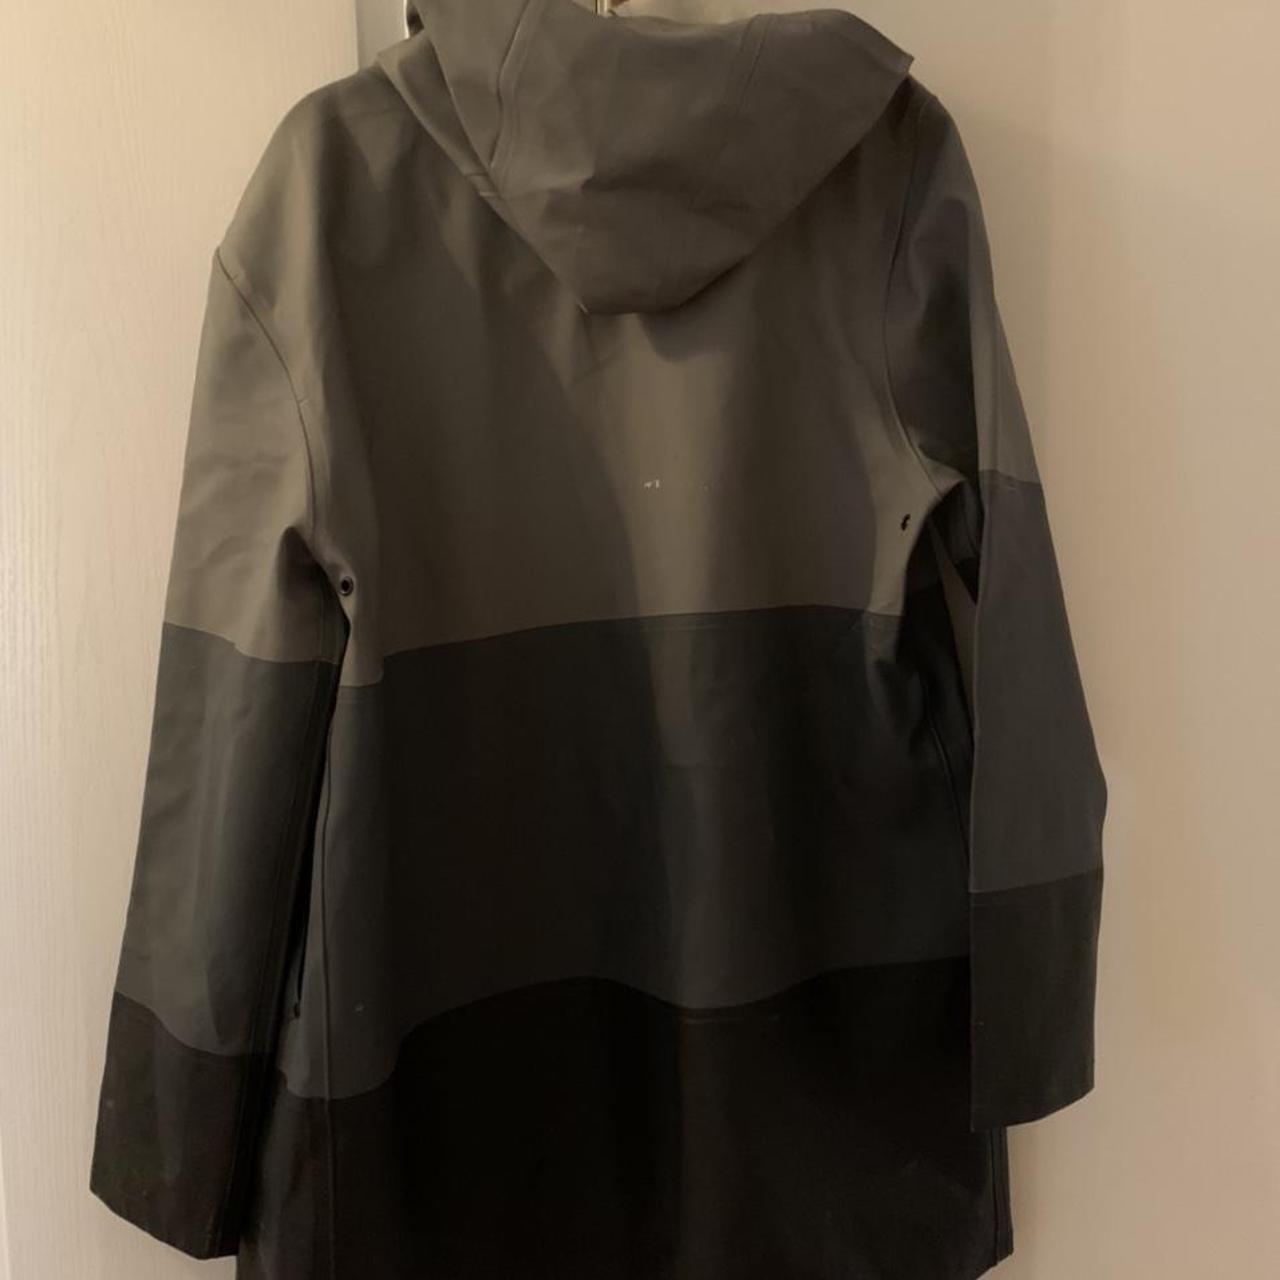 Product Image 3 - Stutterheim Grey Striped Raincoat

Beautiful raincoat